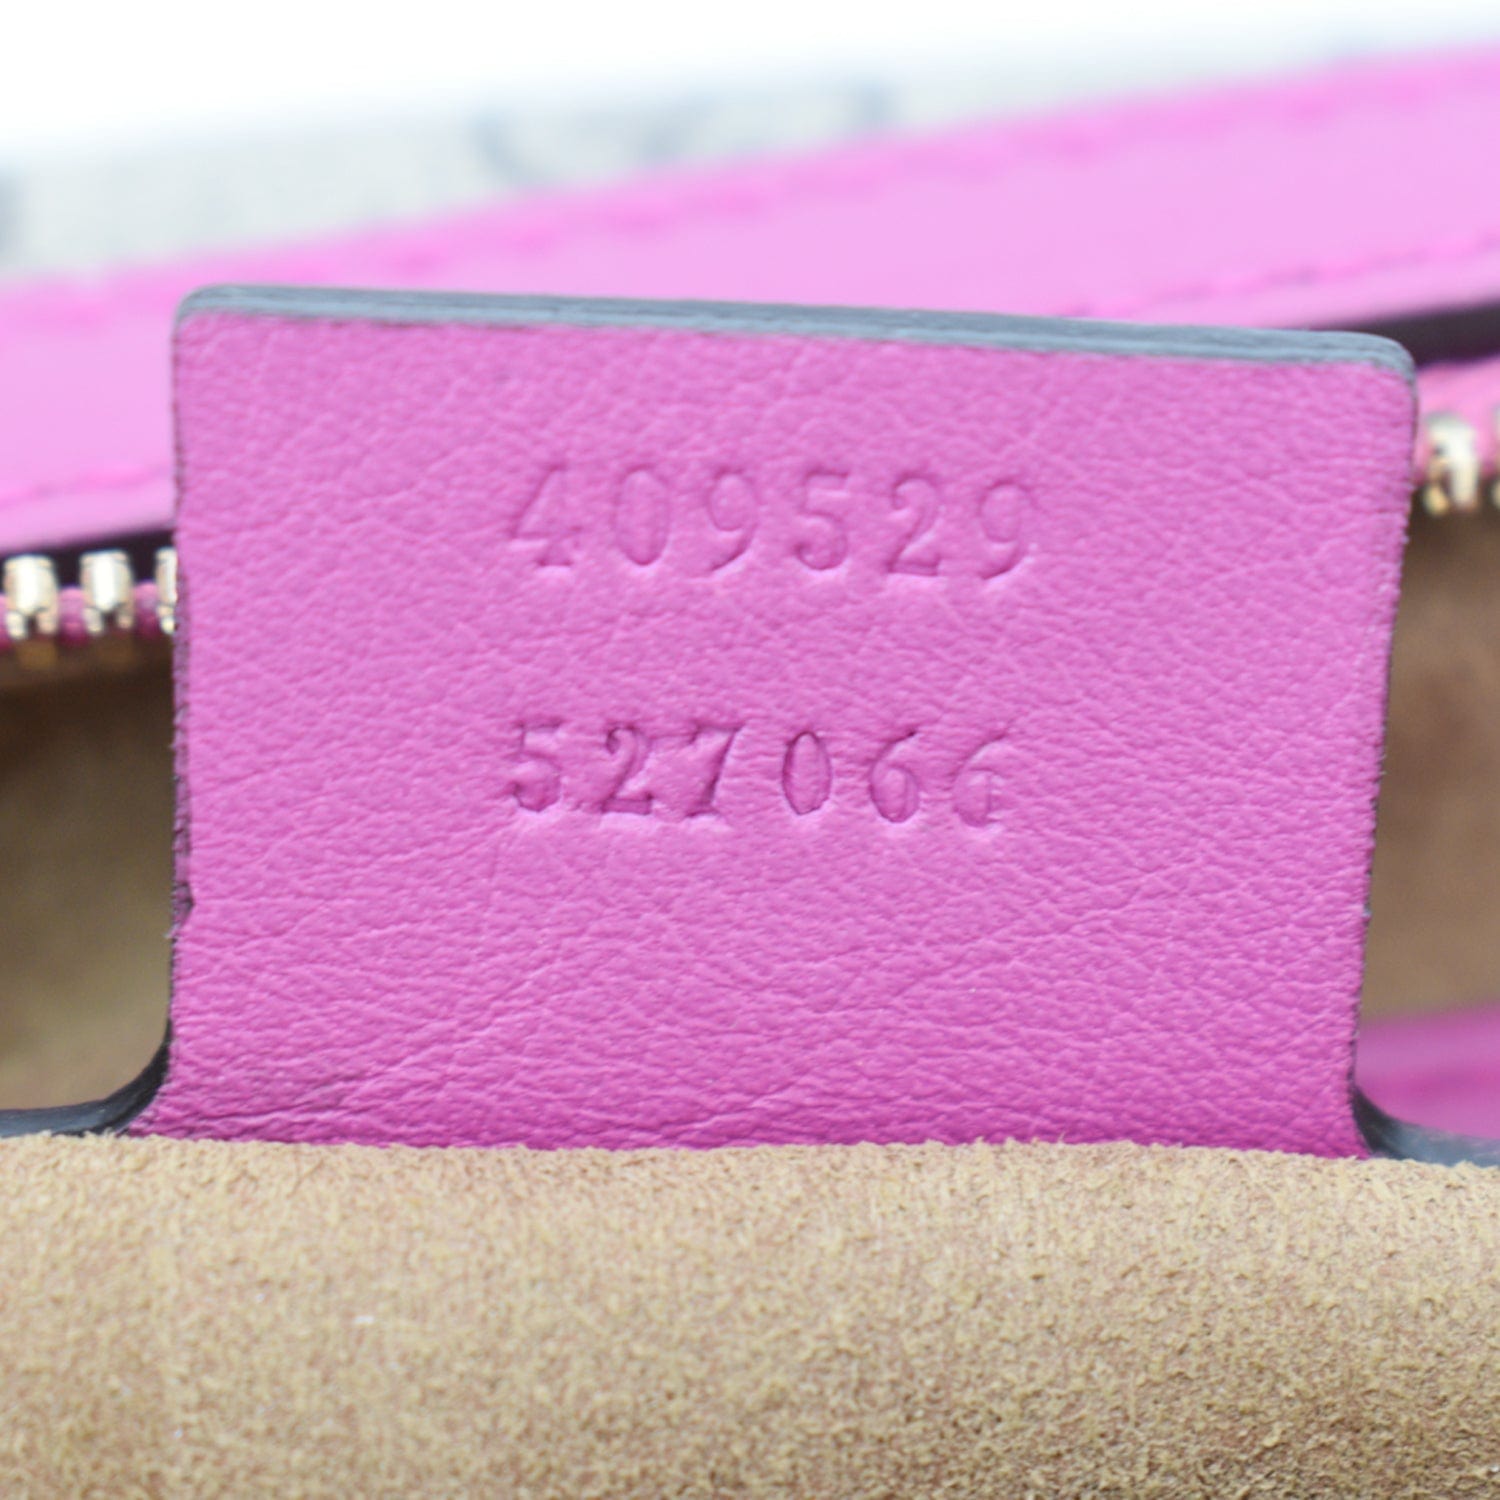 Gucci All Leather Boston Bag Mauve Pink